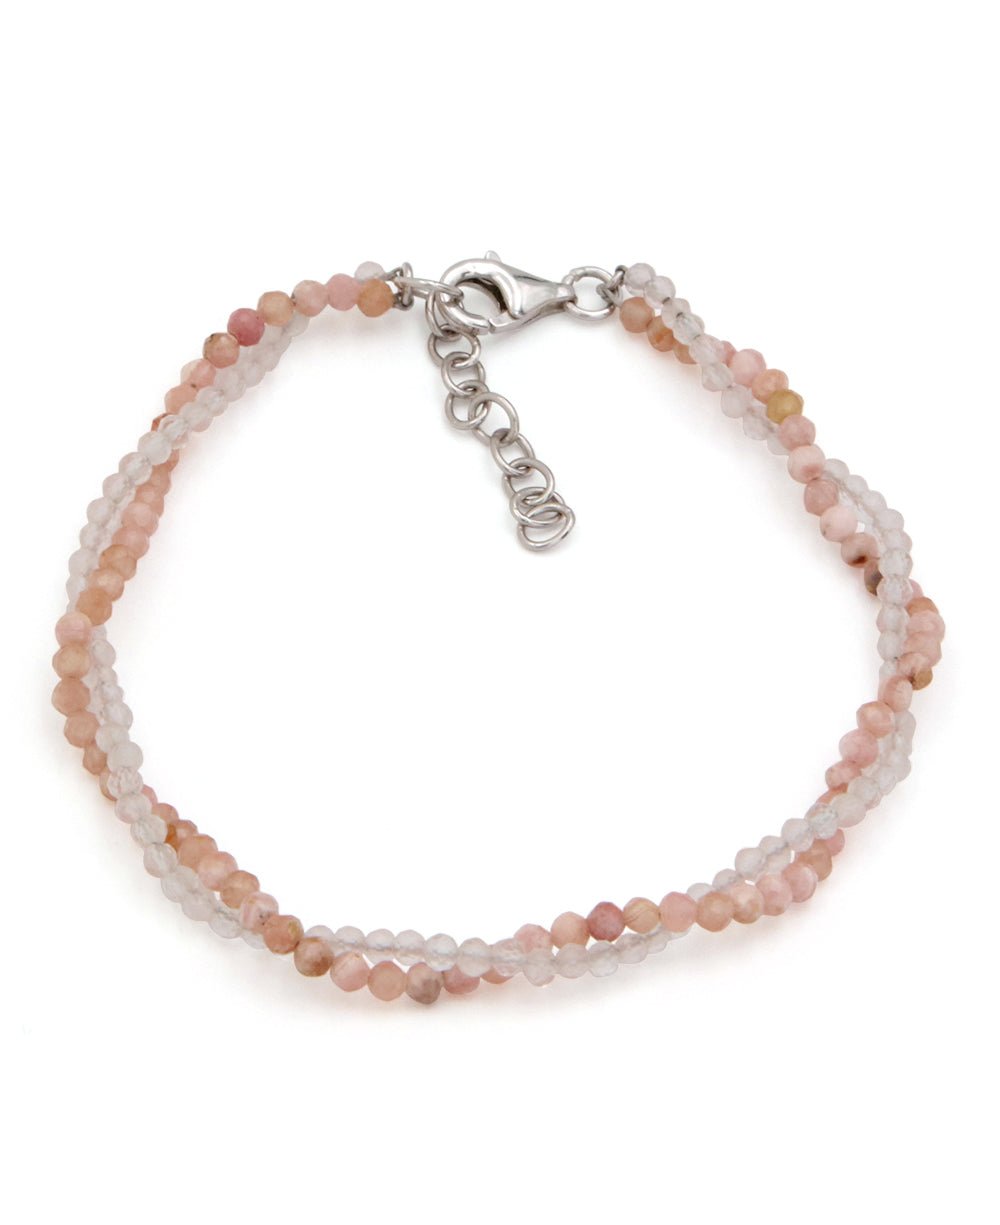 Rose Quartz and Rhodonite Twist Bracelet for Love - Bracelets